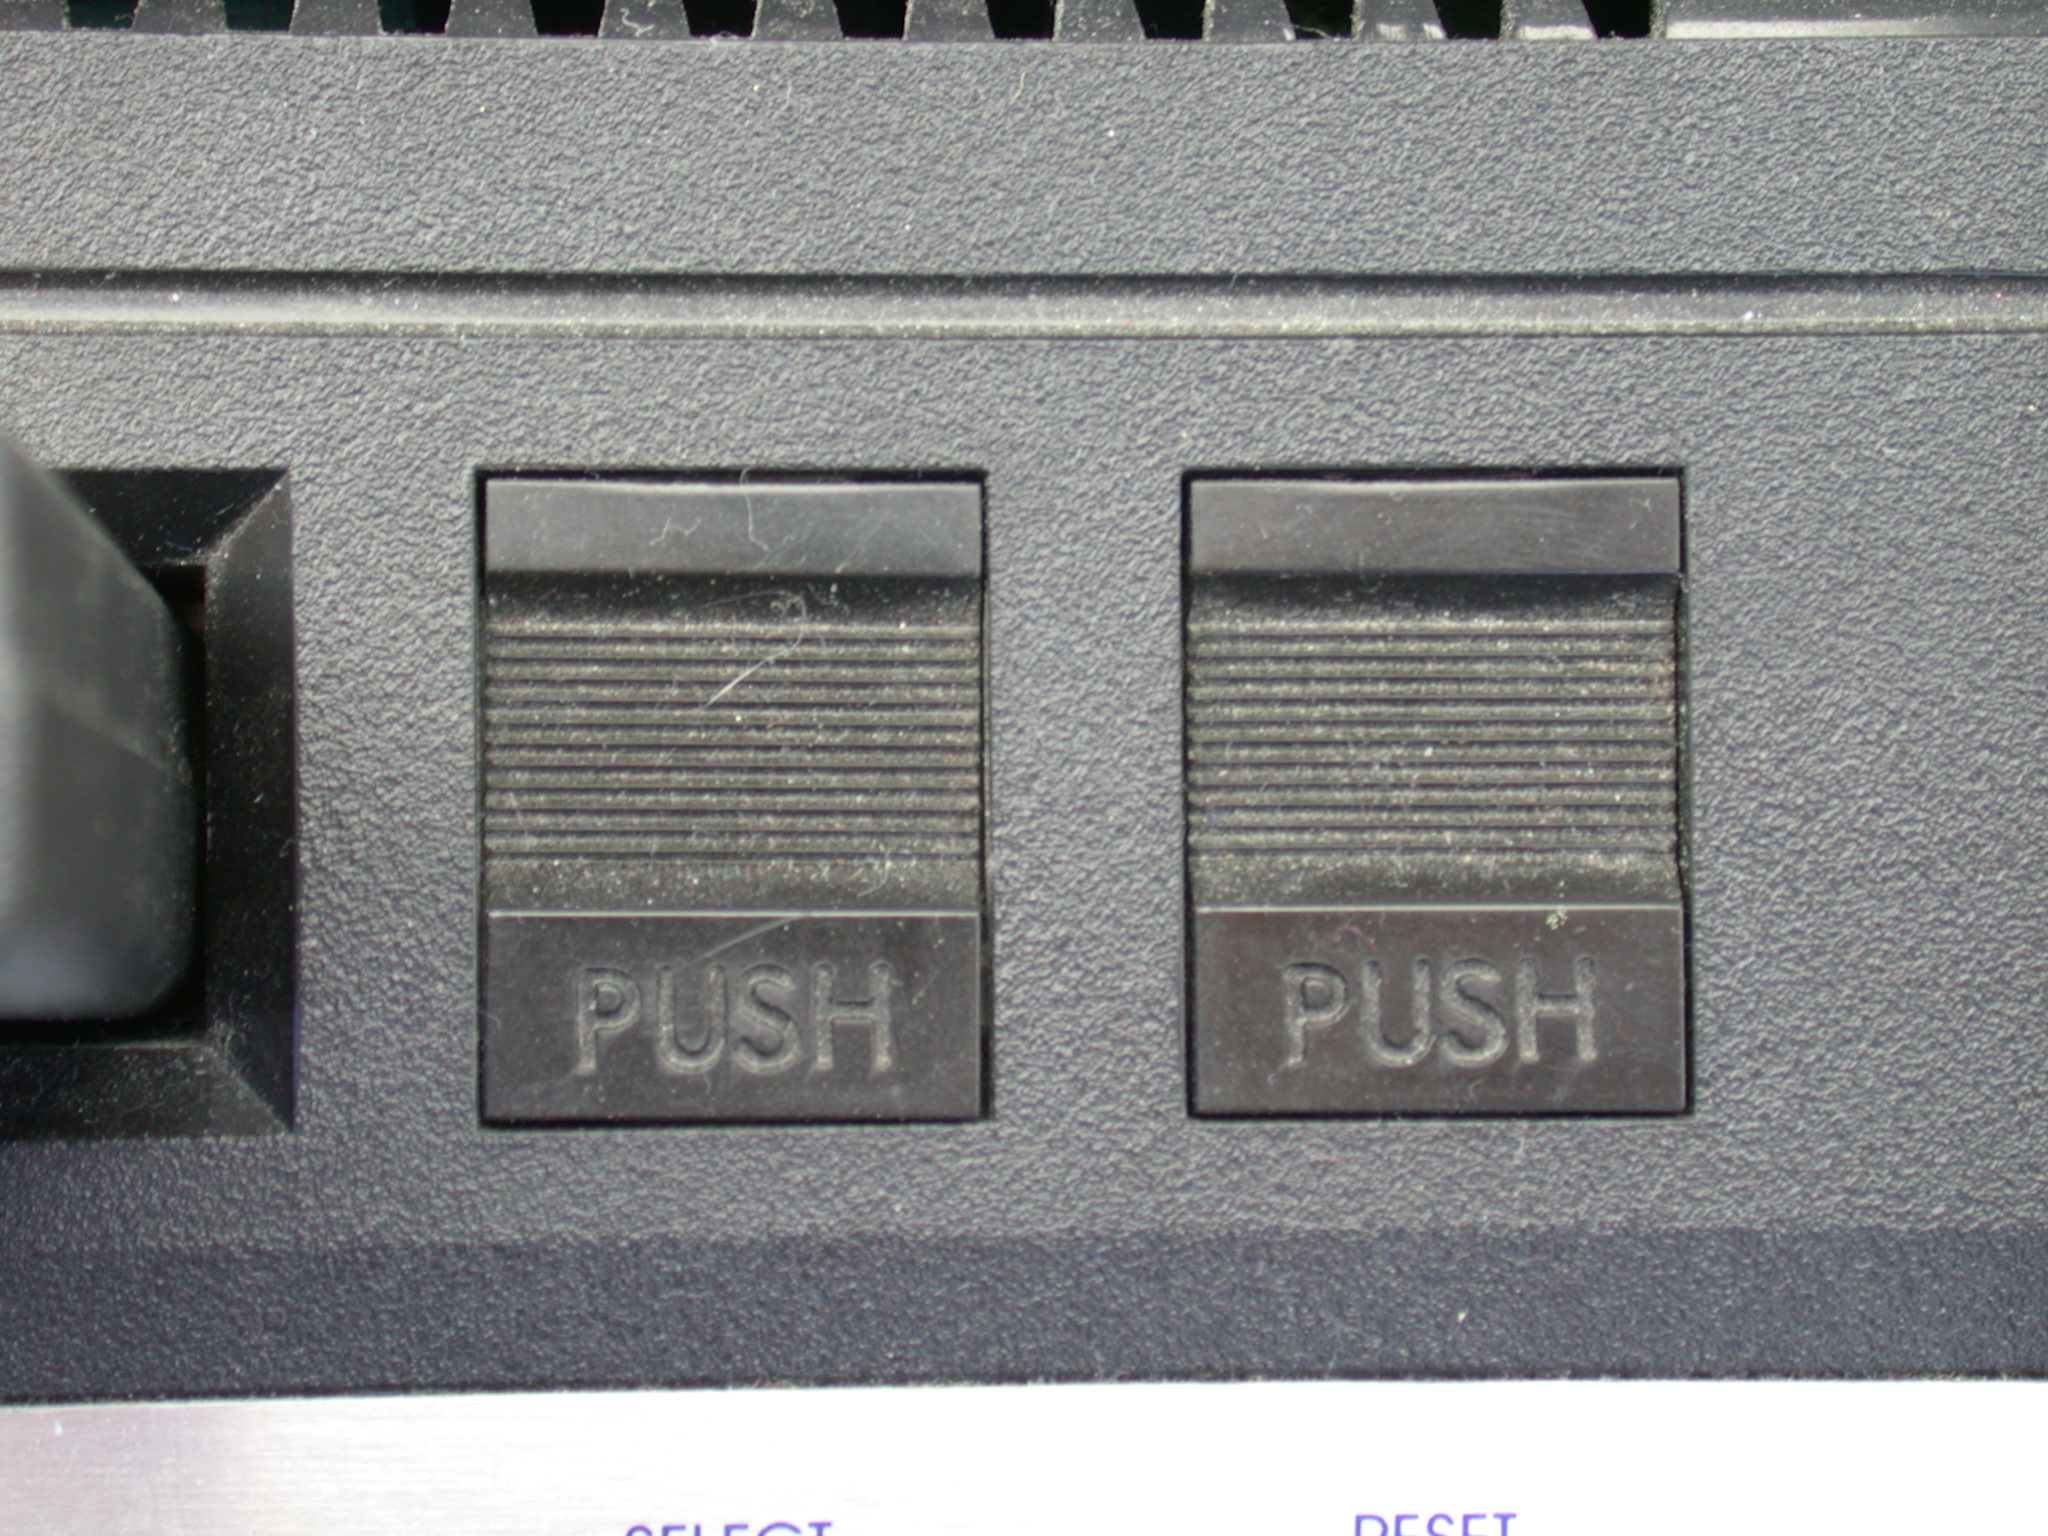 button buttons push pushbutton atari 2600 games console cartridge old 8-bit 8bit